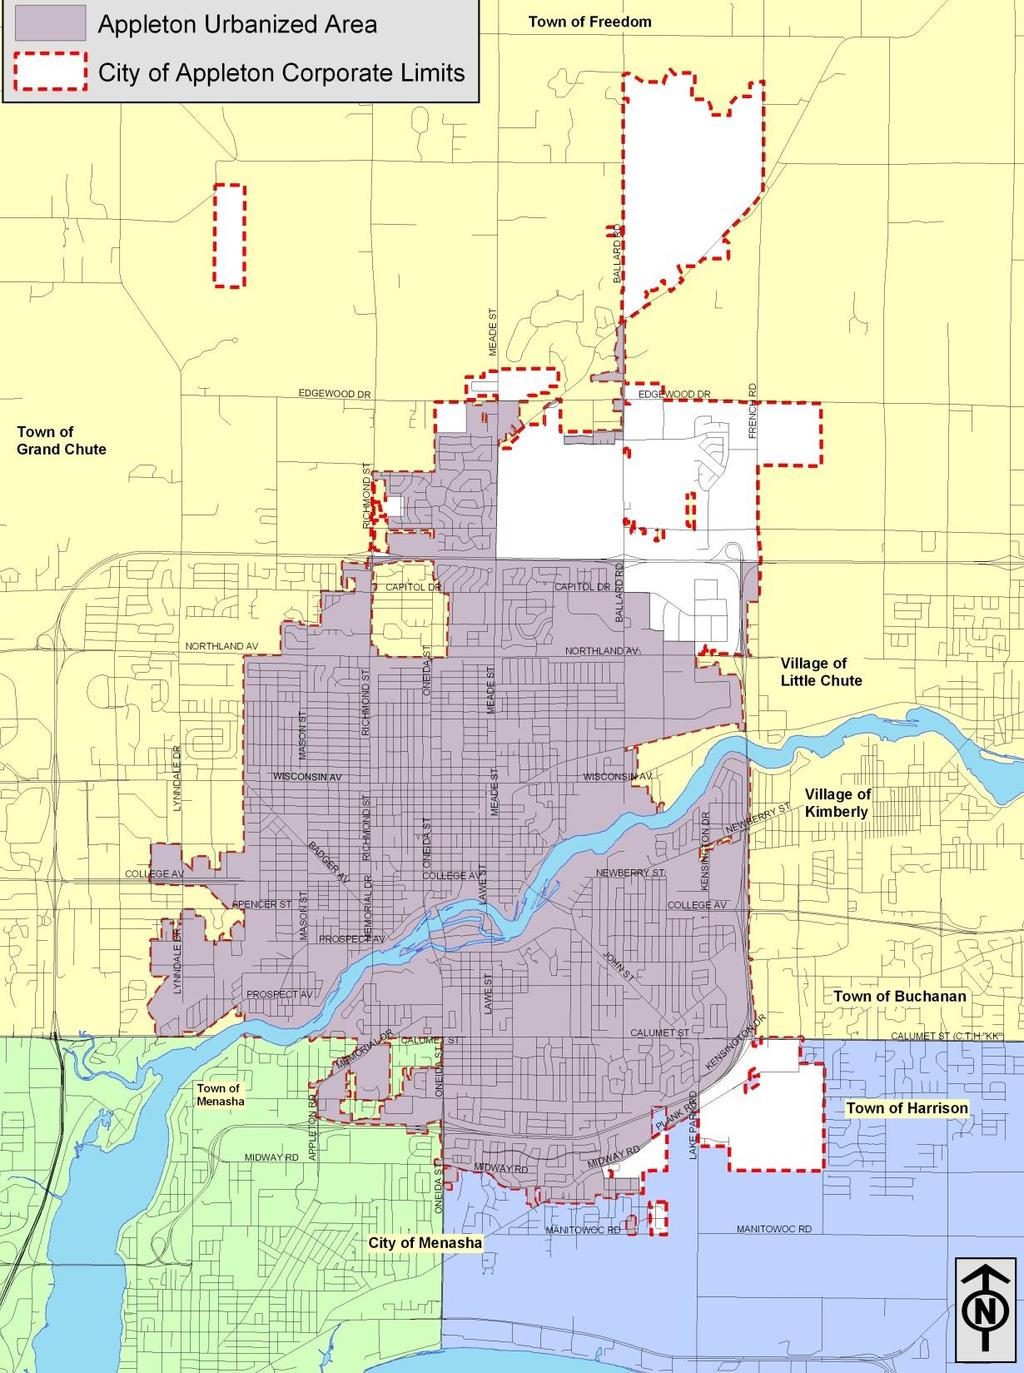 City of Appleton 70,000+ RESIDENTS 22 SQUARE